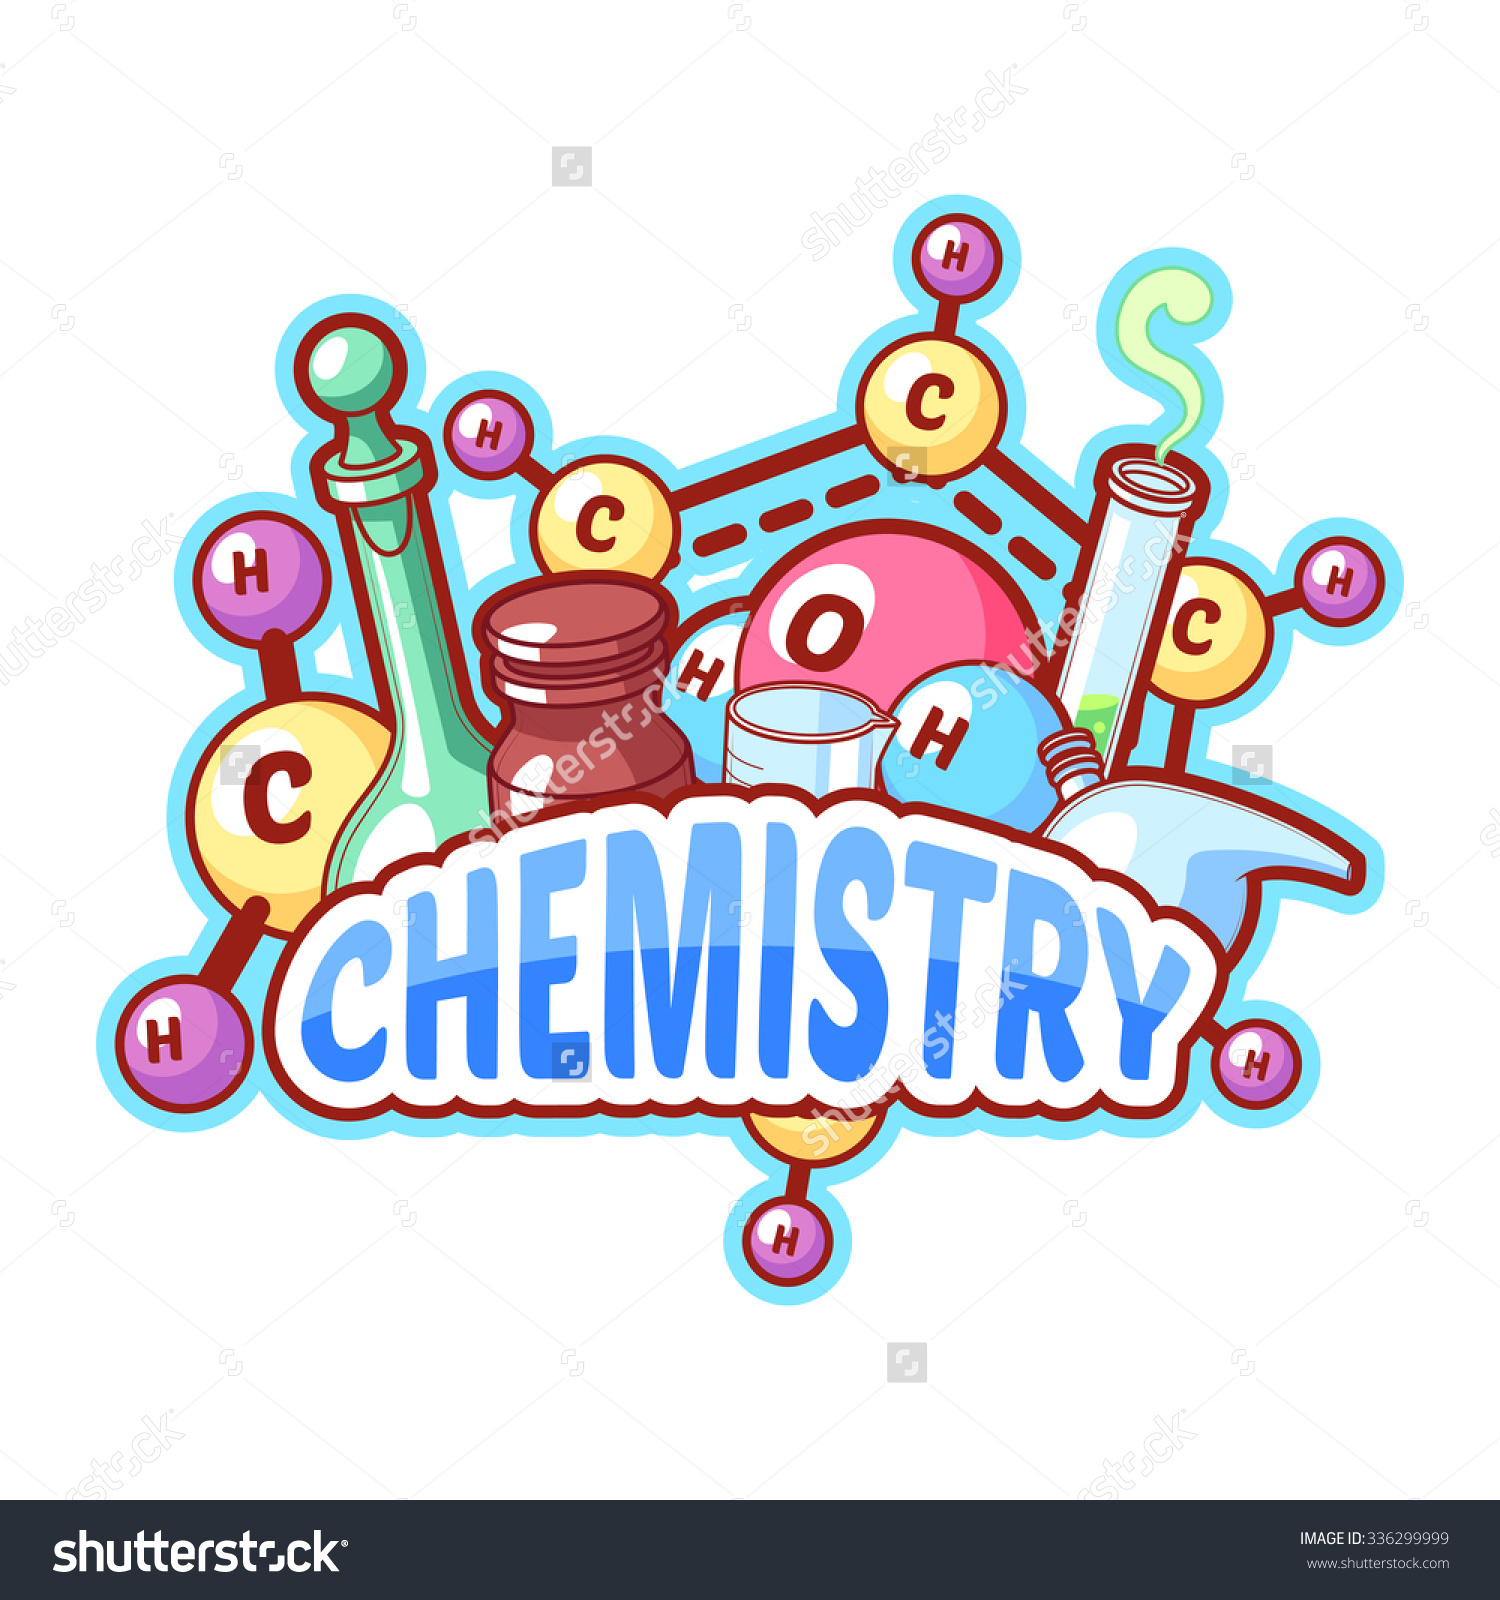 Chemistry clipart logo, Chemistry logo Transparent FREE for